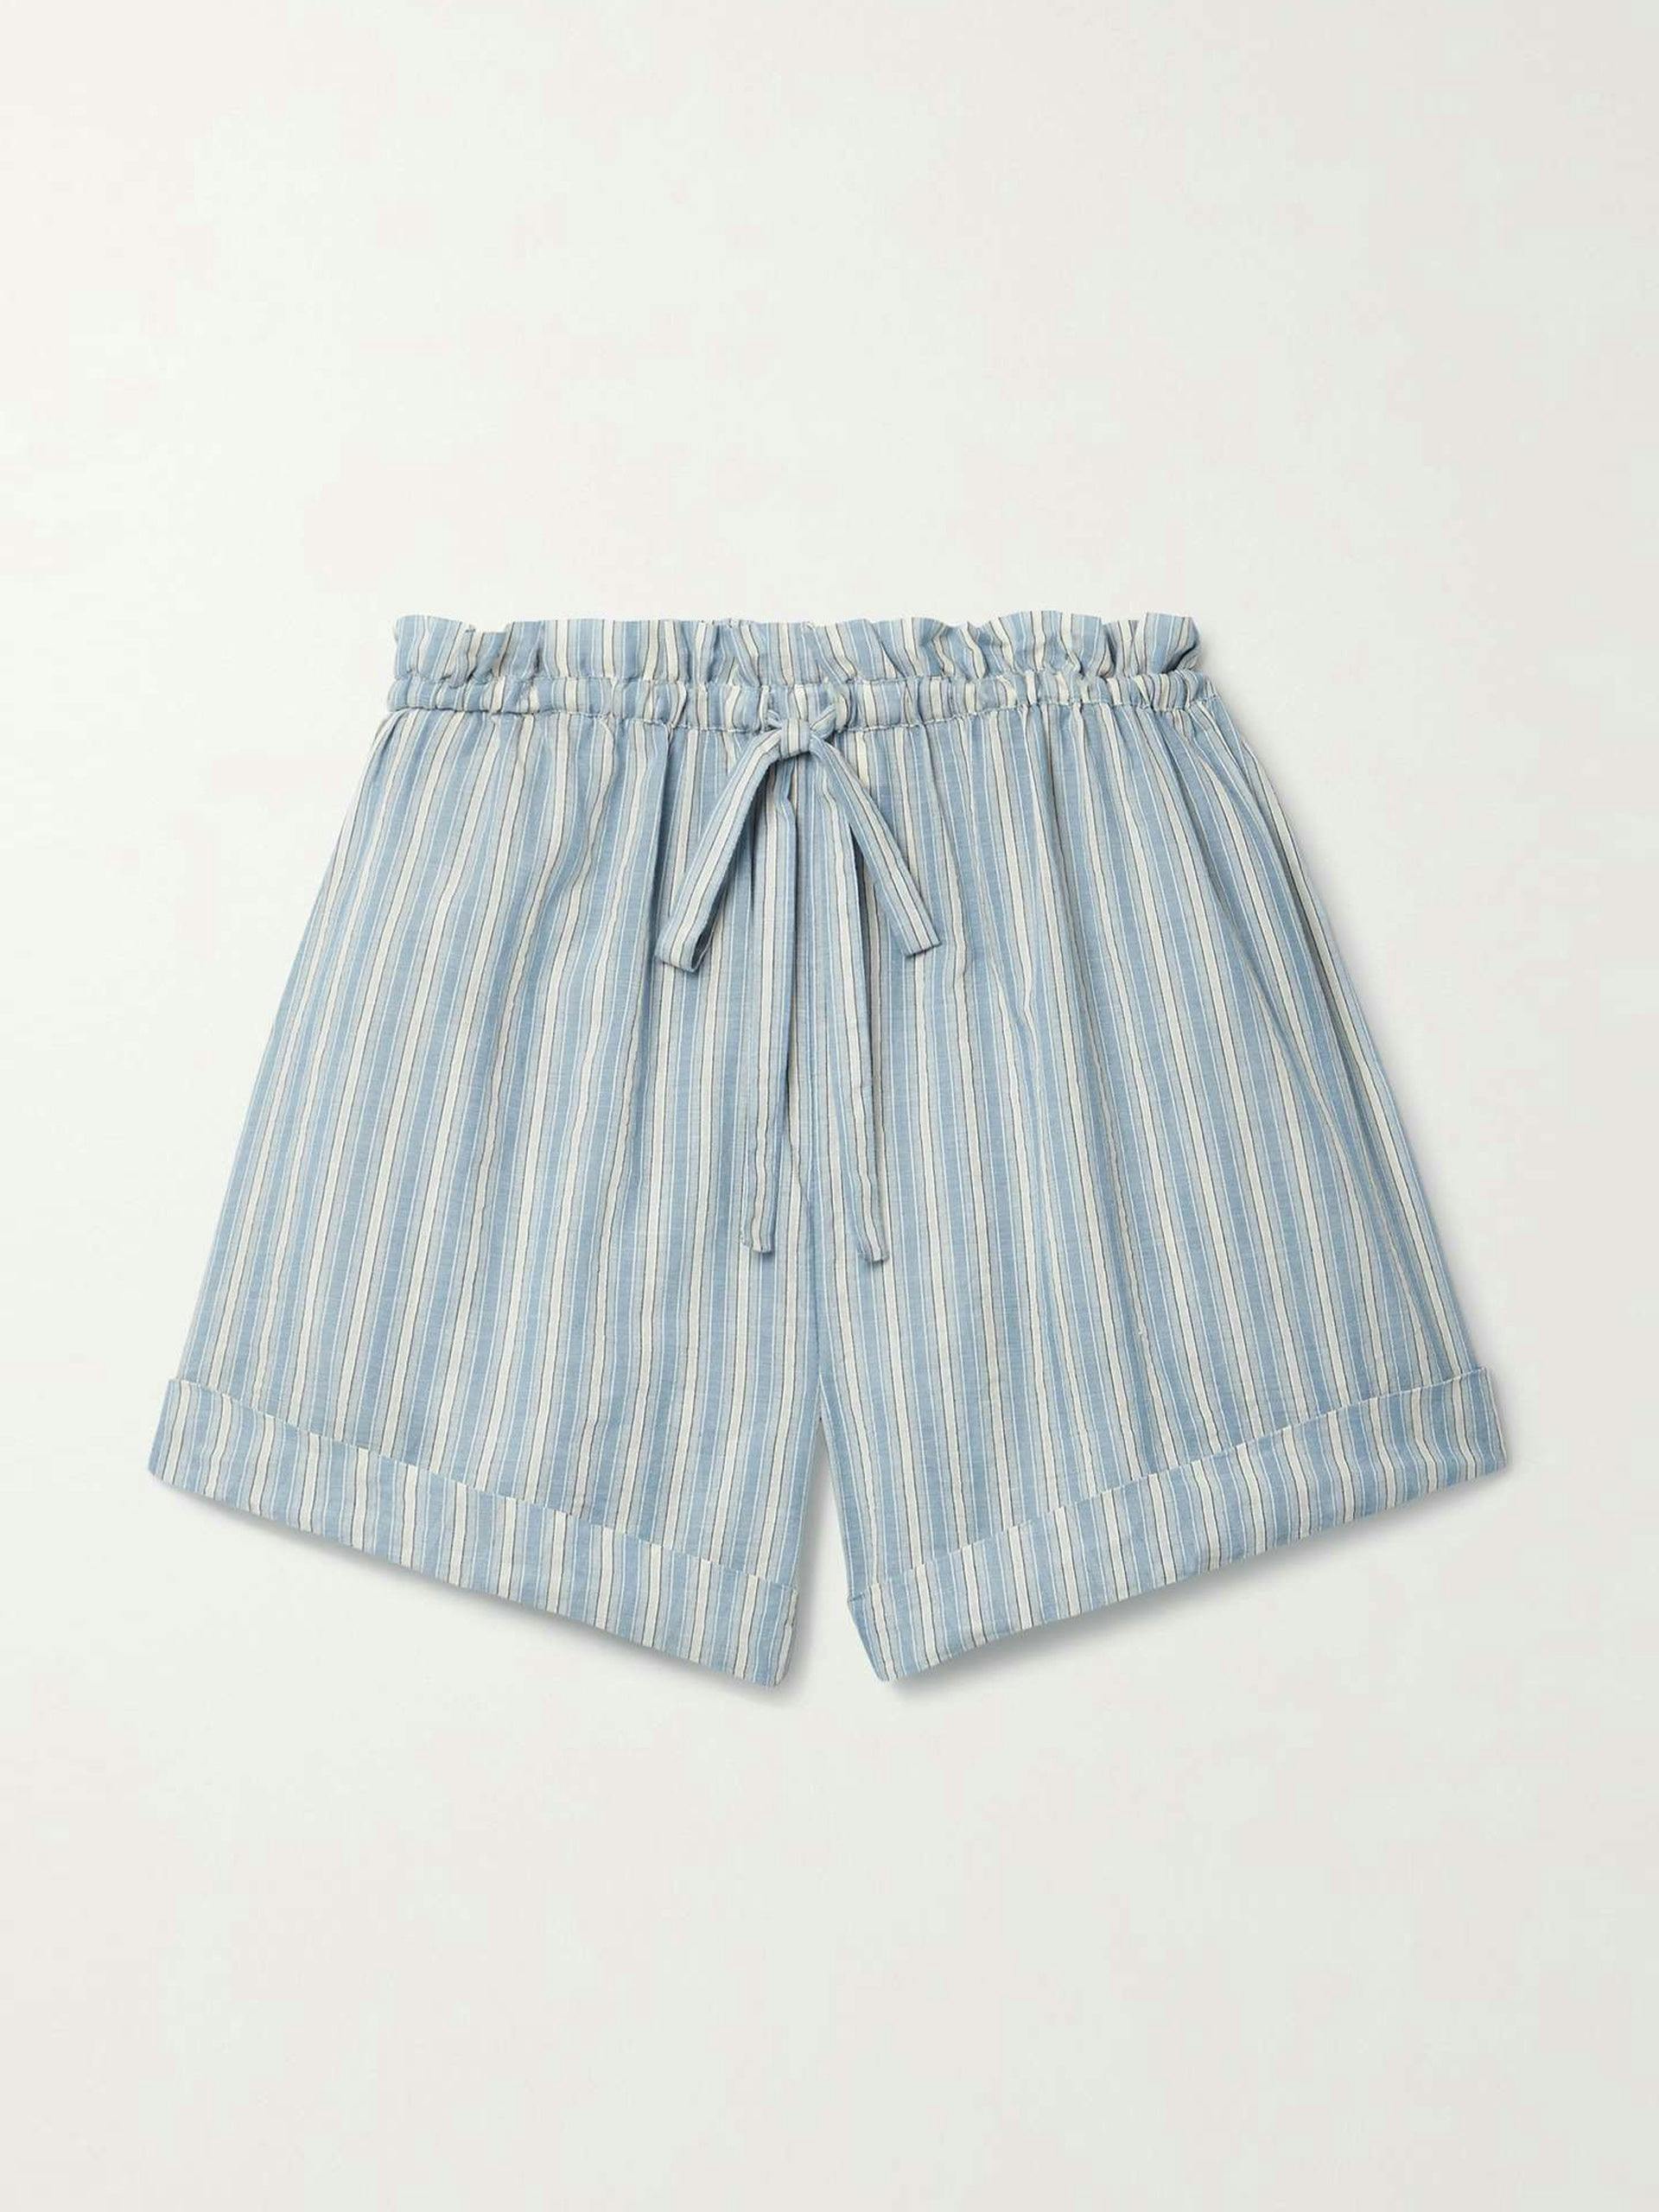 Blue striped cotton shorts